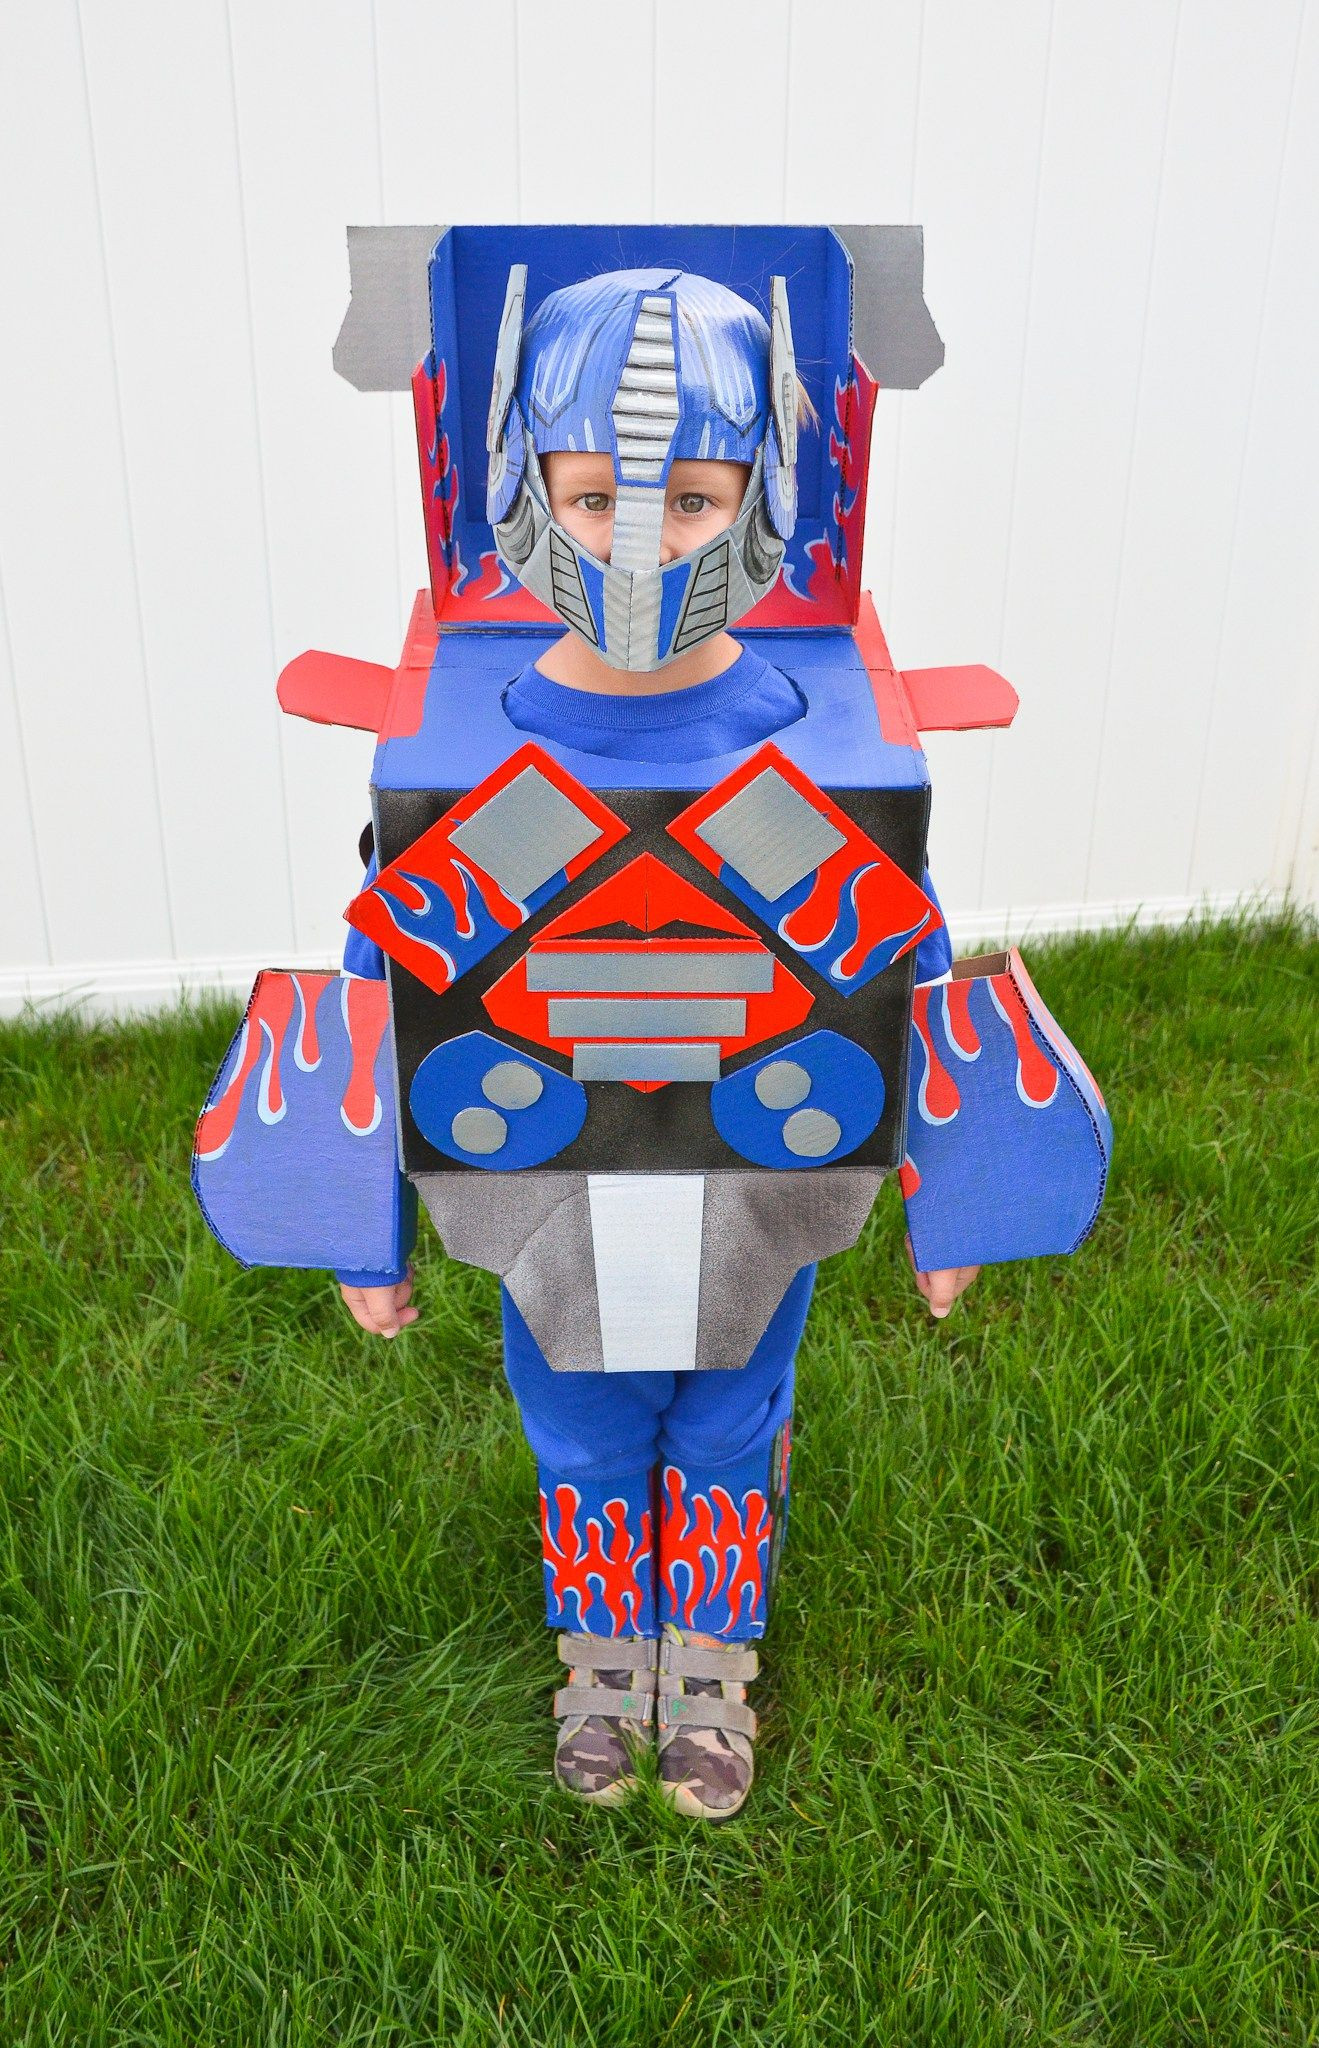 DIY Transformers Costumes
 Optimus Prime Transformers Costume Cardboard